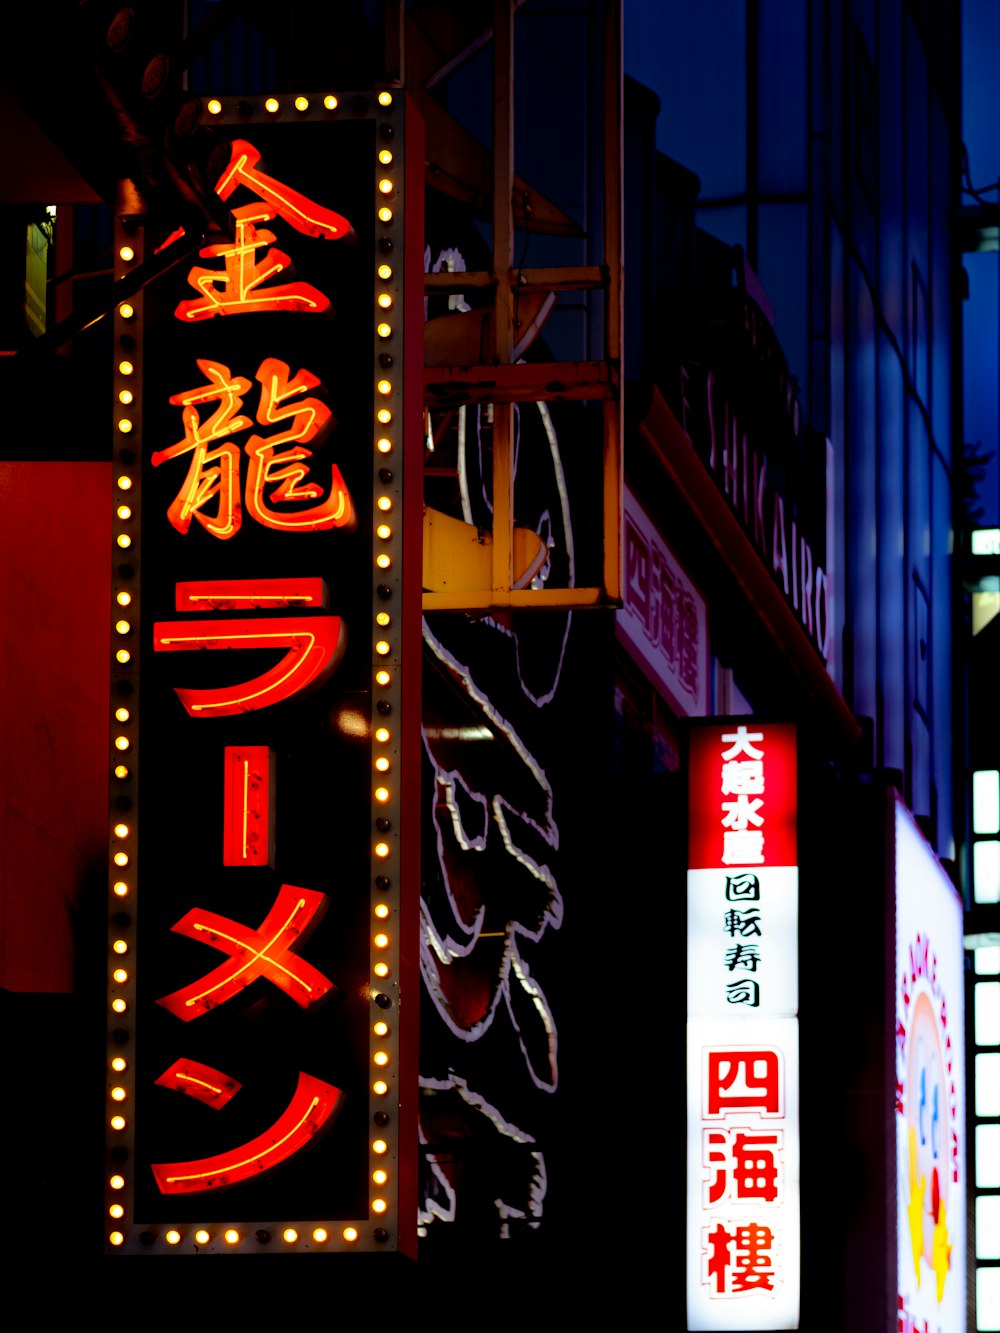 Señalización de luz de neón con texto kanji rojo y negro